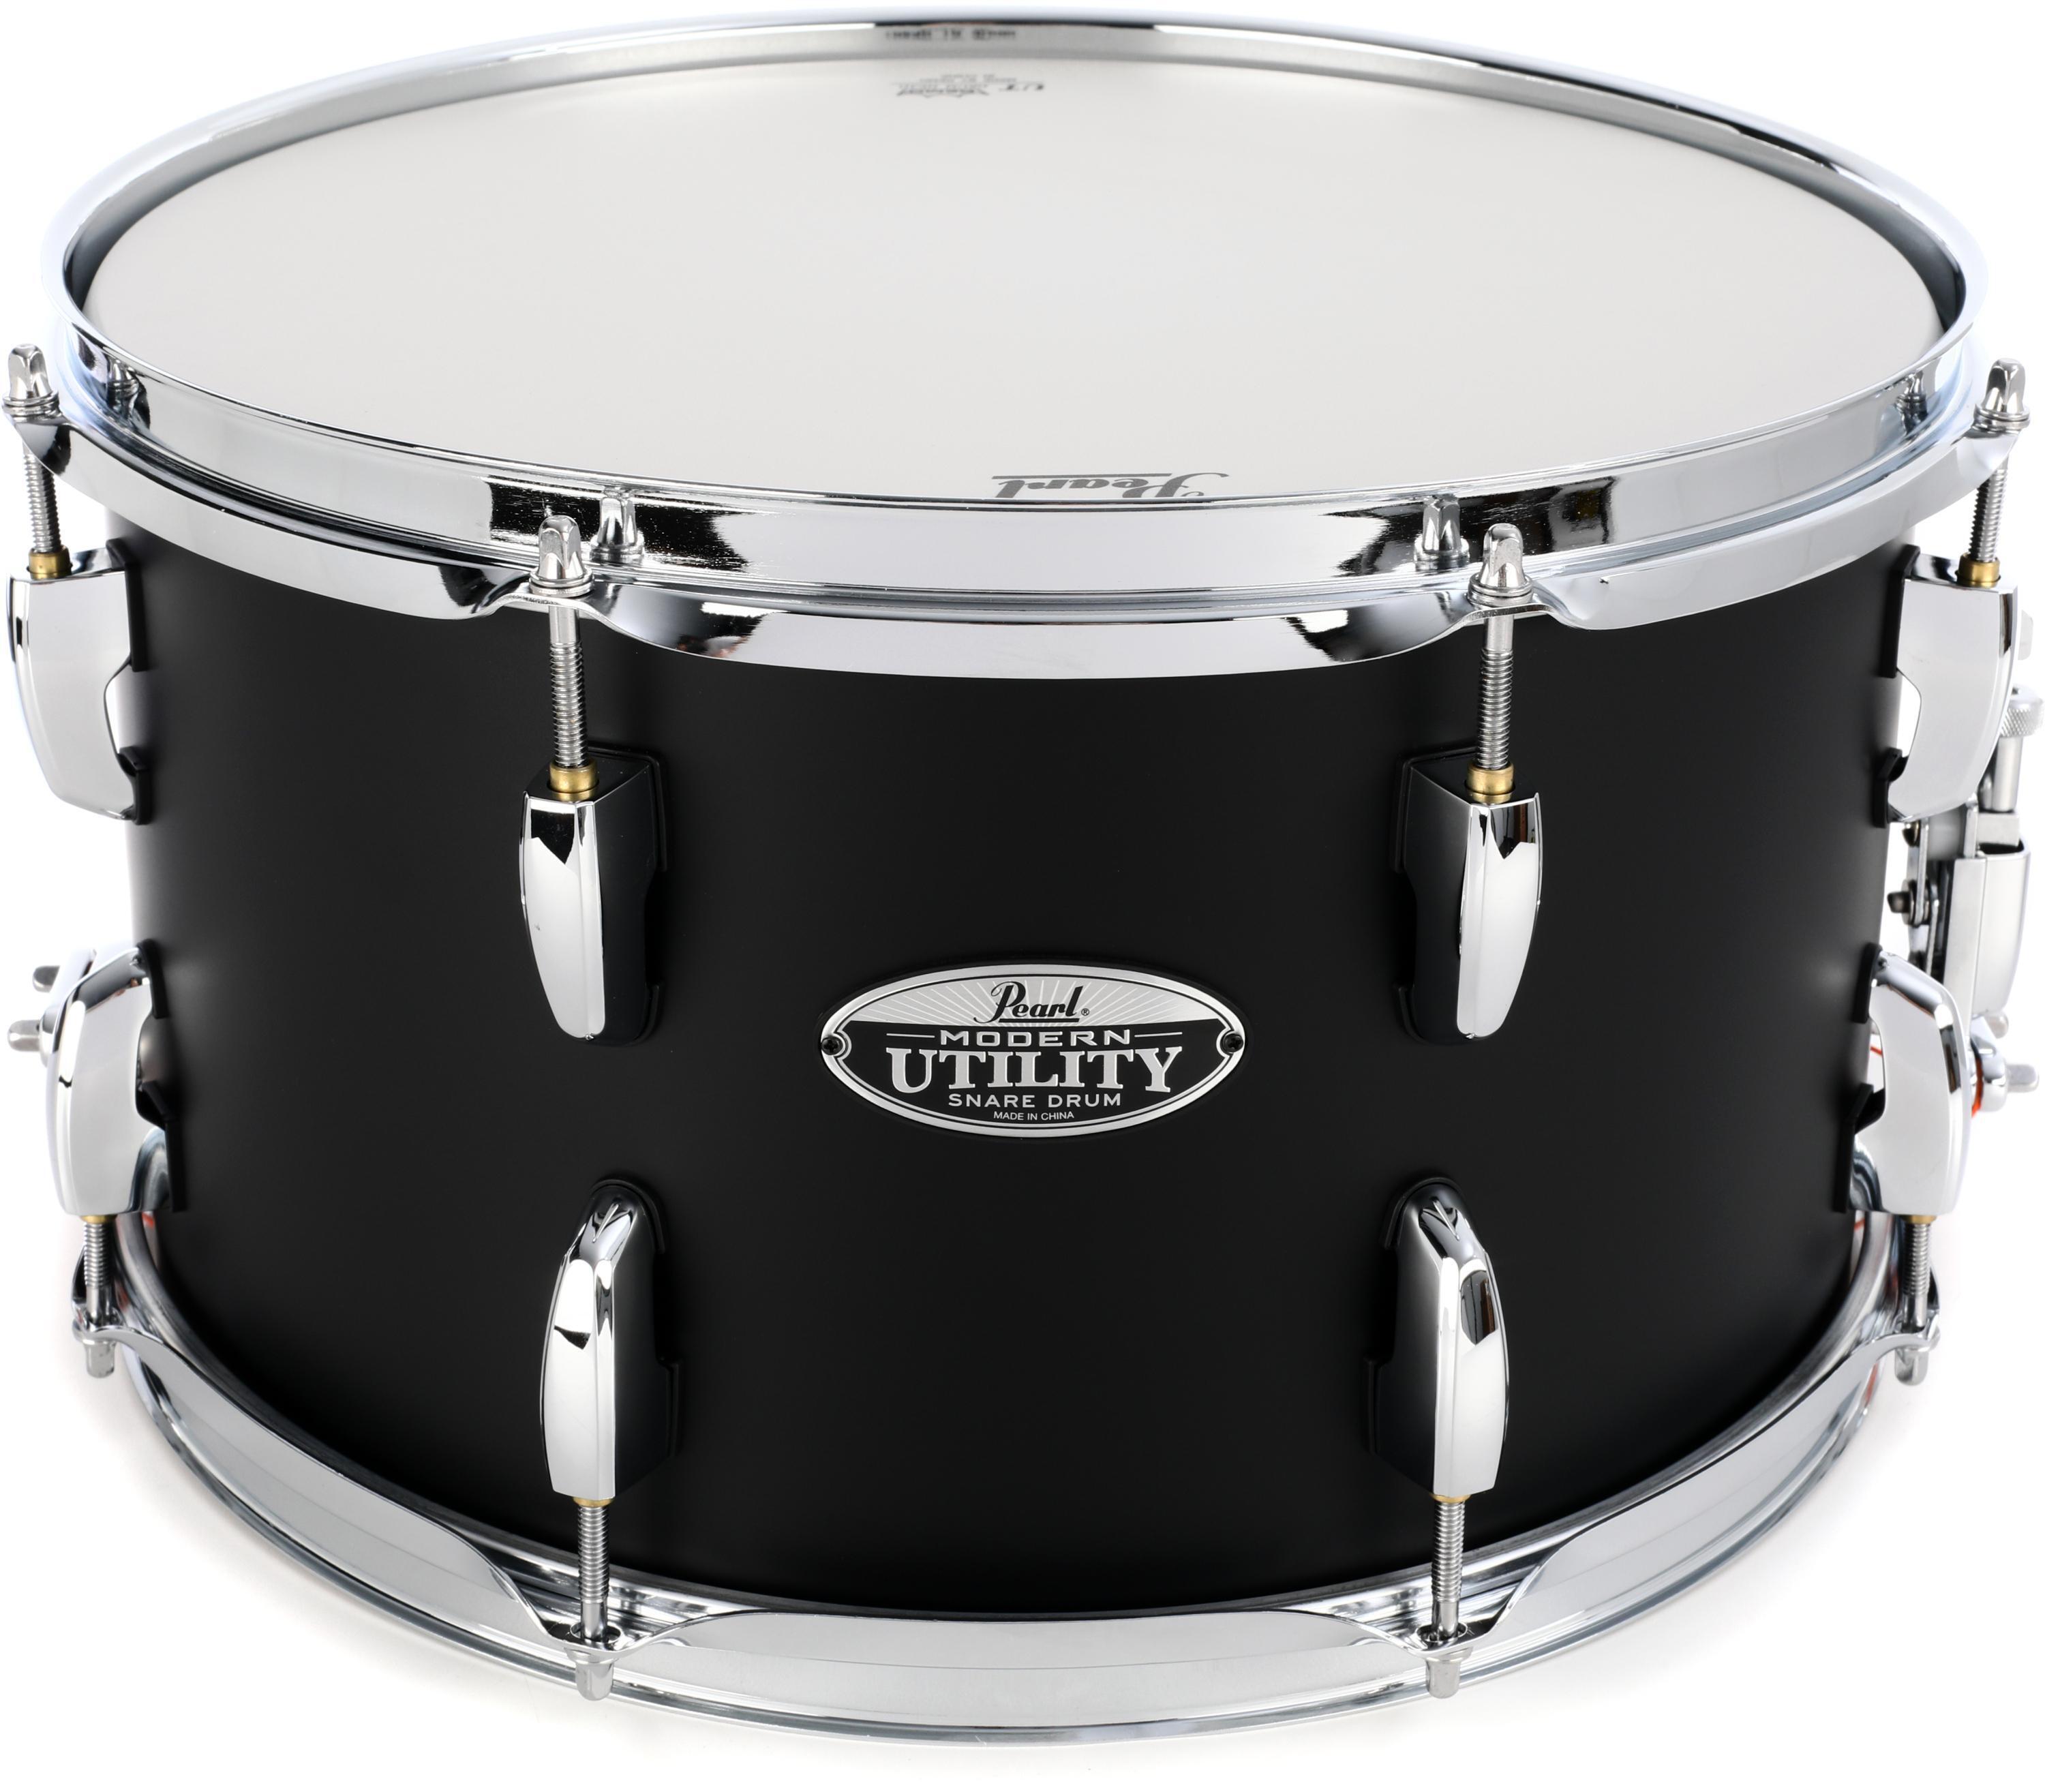 Pearl Modern Utility Snare Drum - 14 x 8 inch - Satin Black